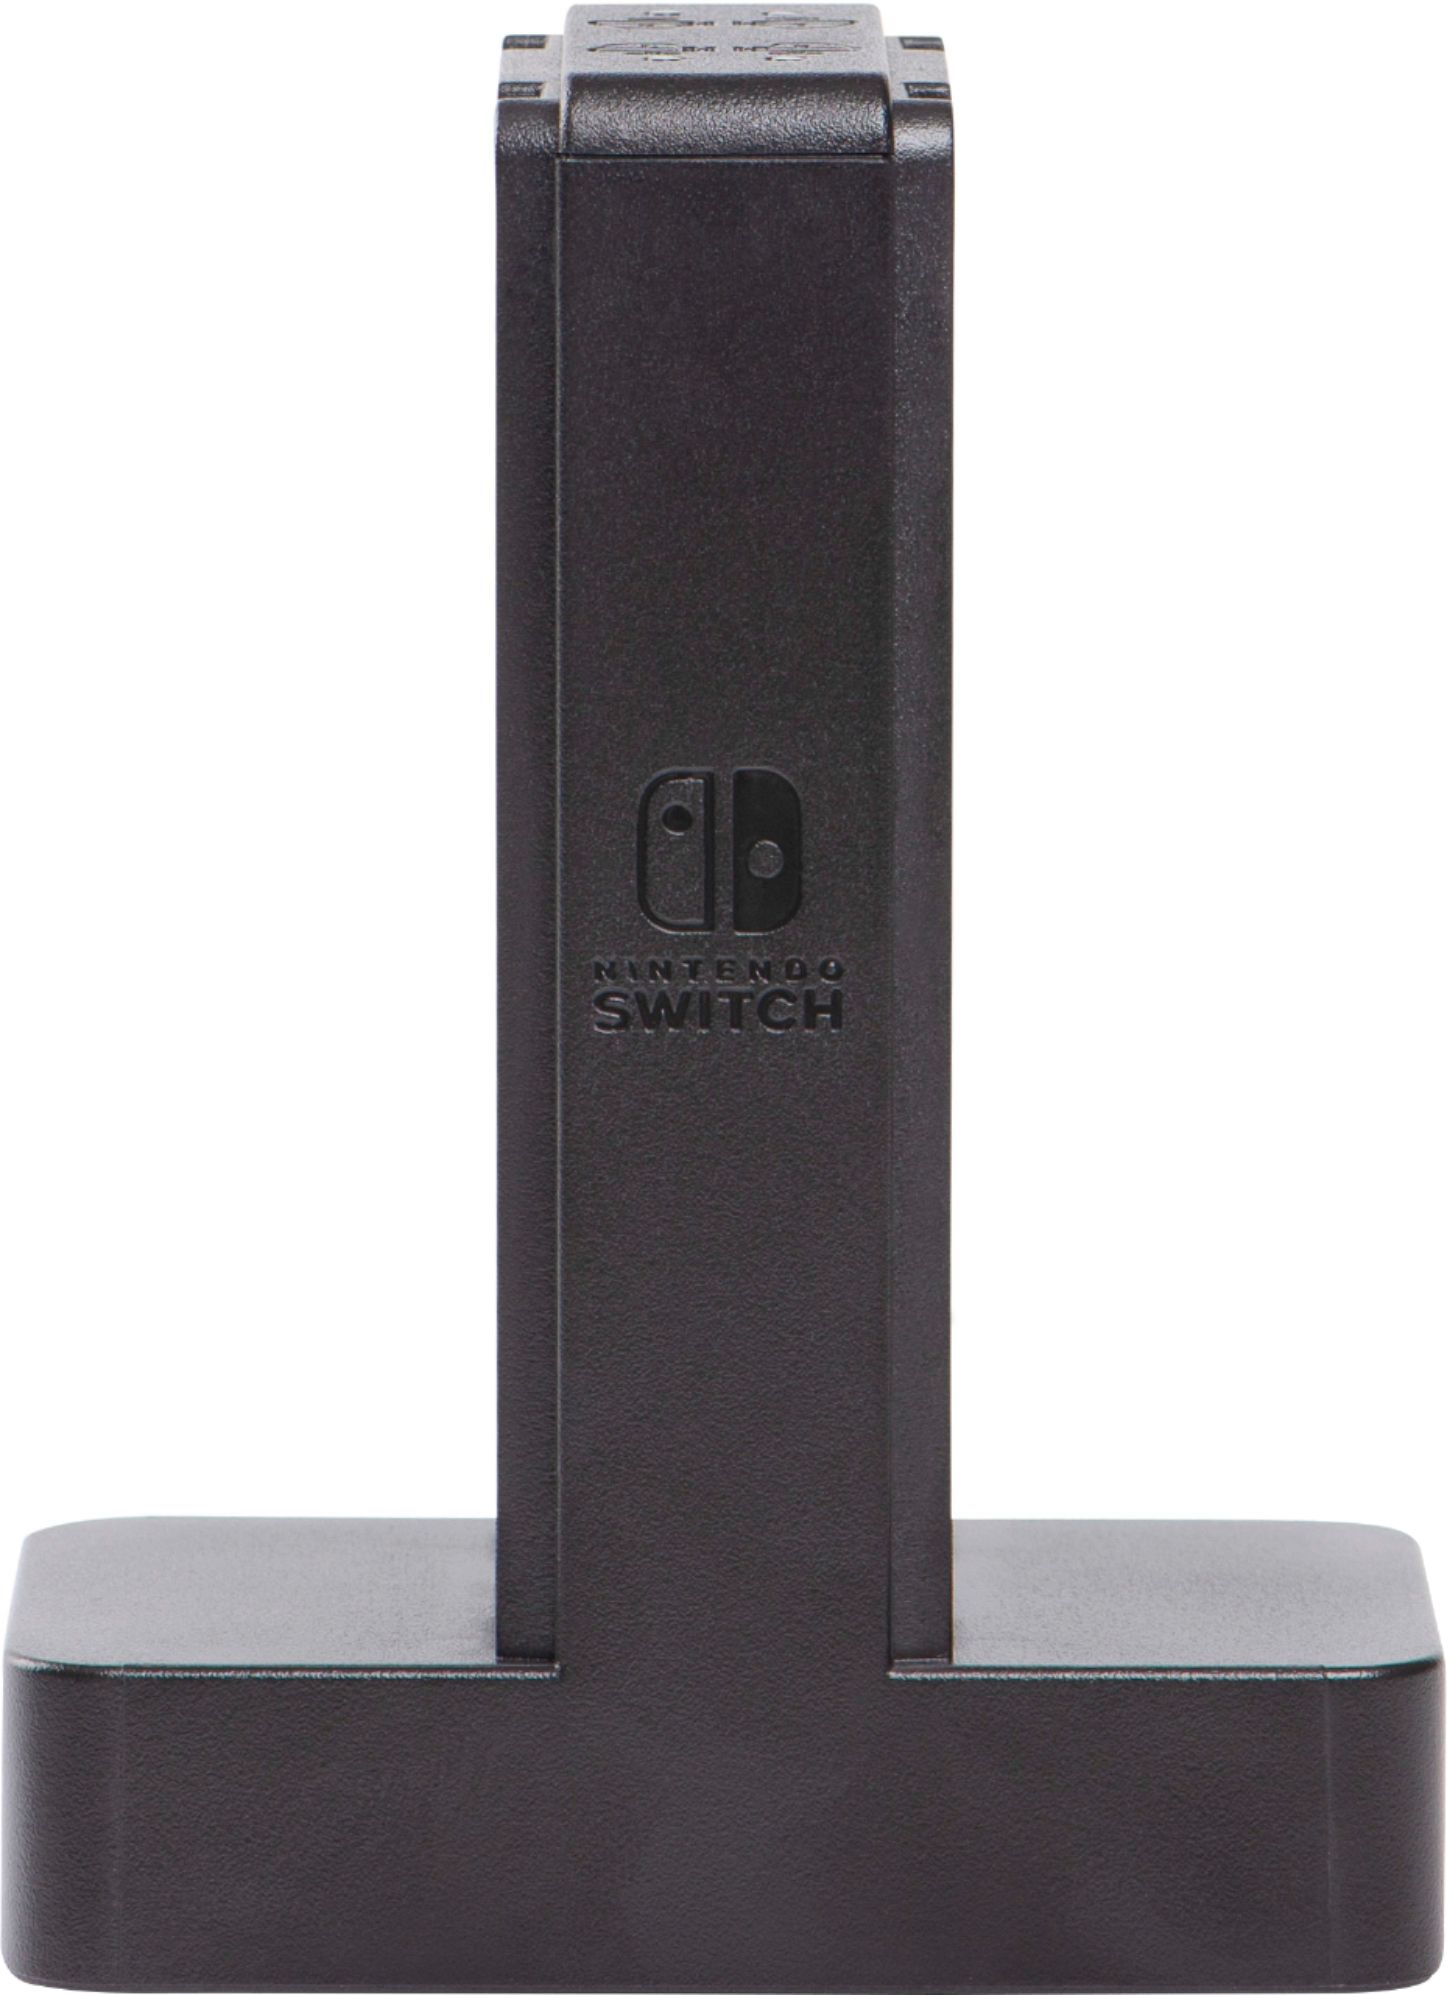 Joy-Con Charging Dock - Hardware - Nintendo - Nintendo Official Site